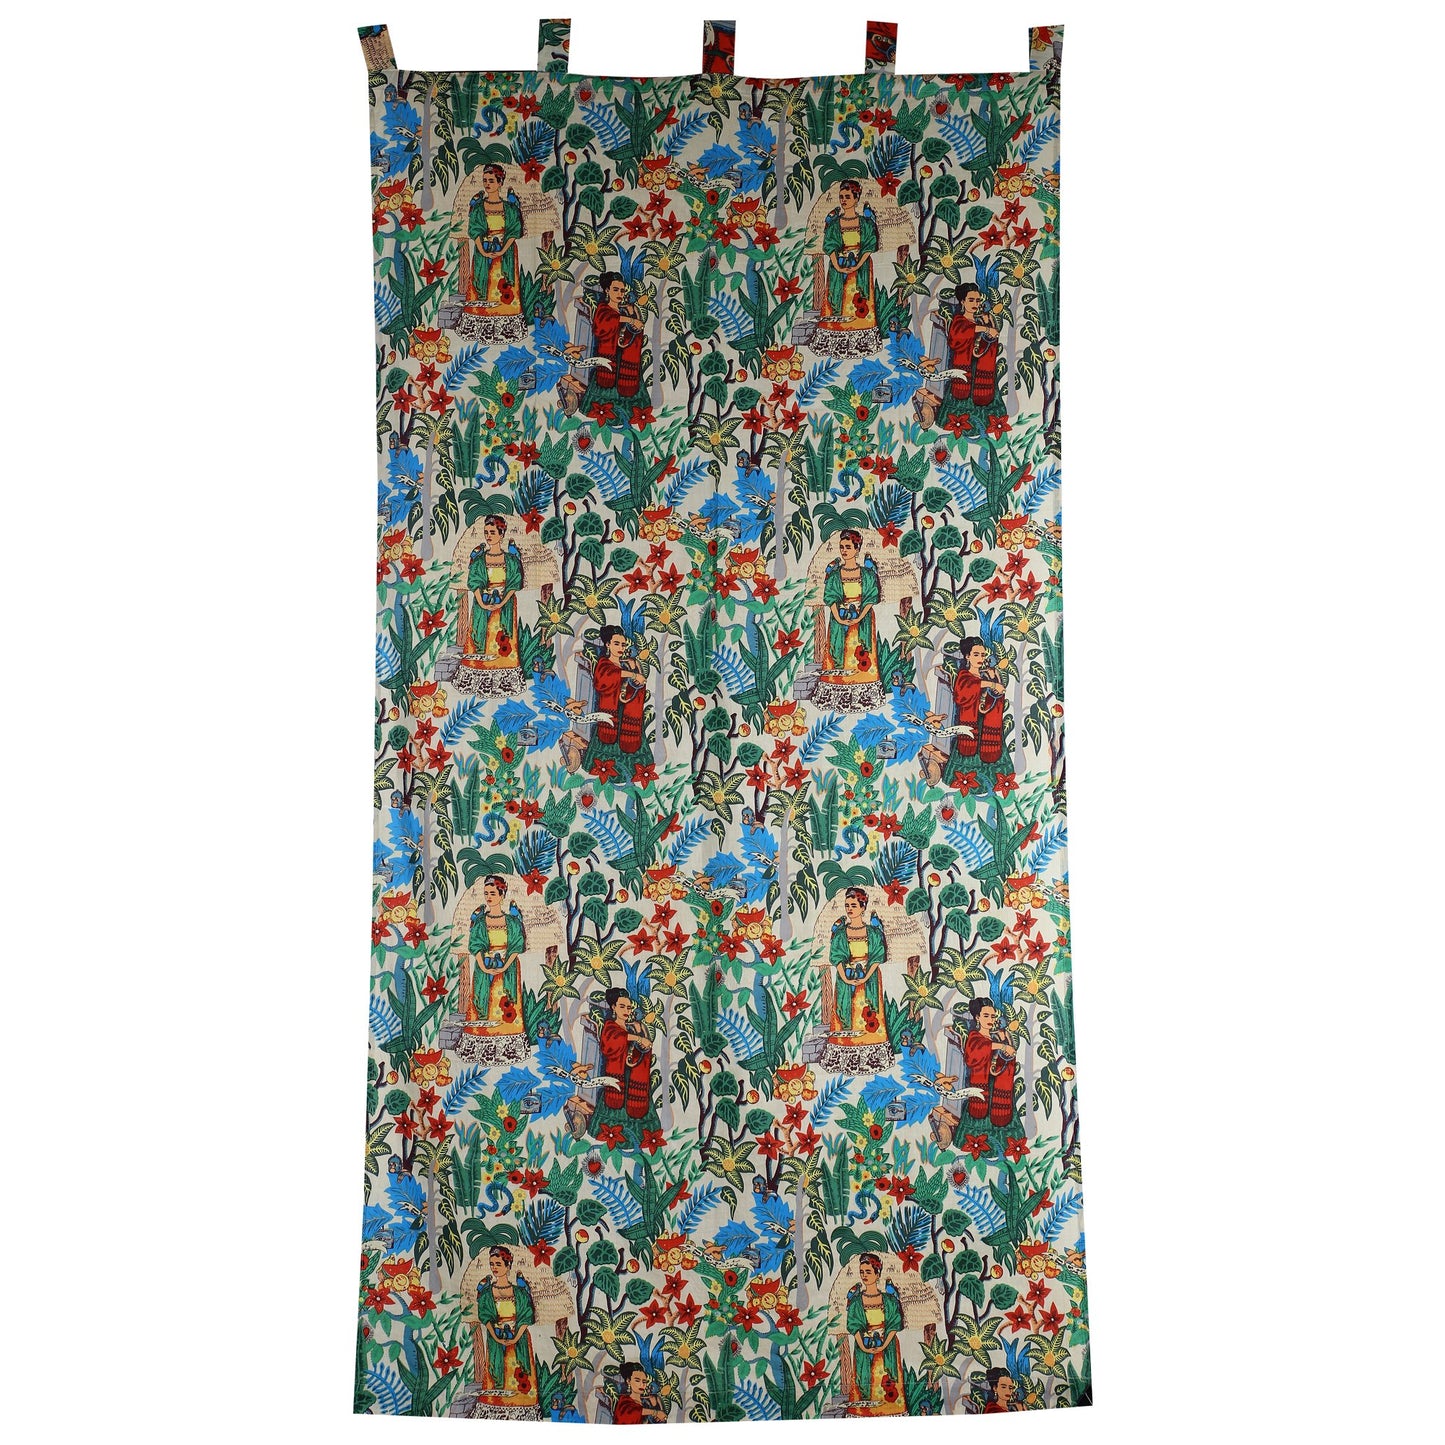 Frida Kahlo Voile Curtain Pair Beige - The Teal Thread